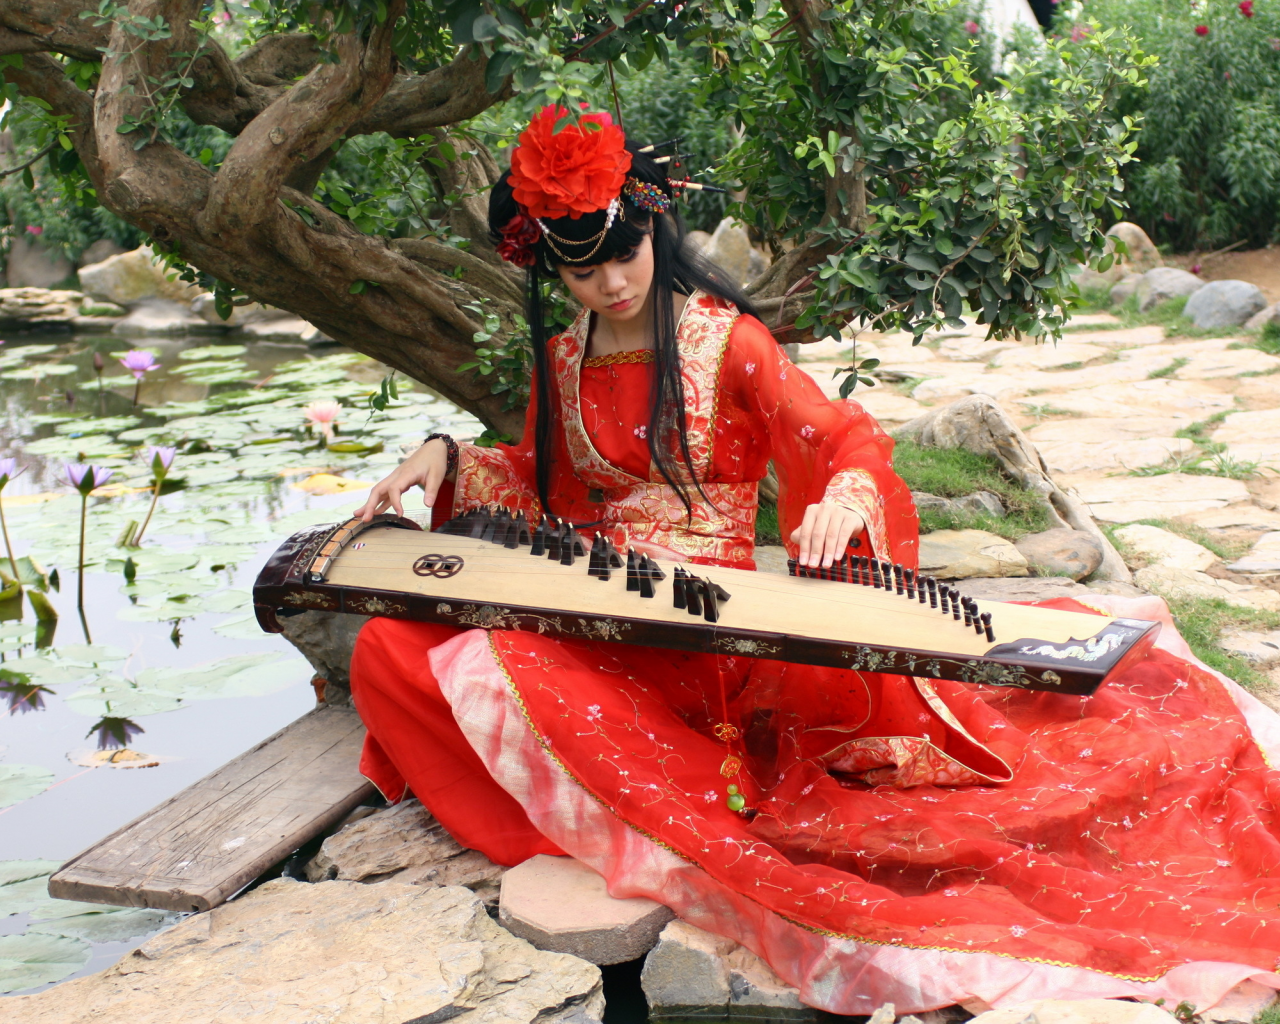 Природа, девущка, азиатка, инструмент, музыка.